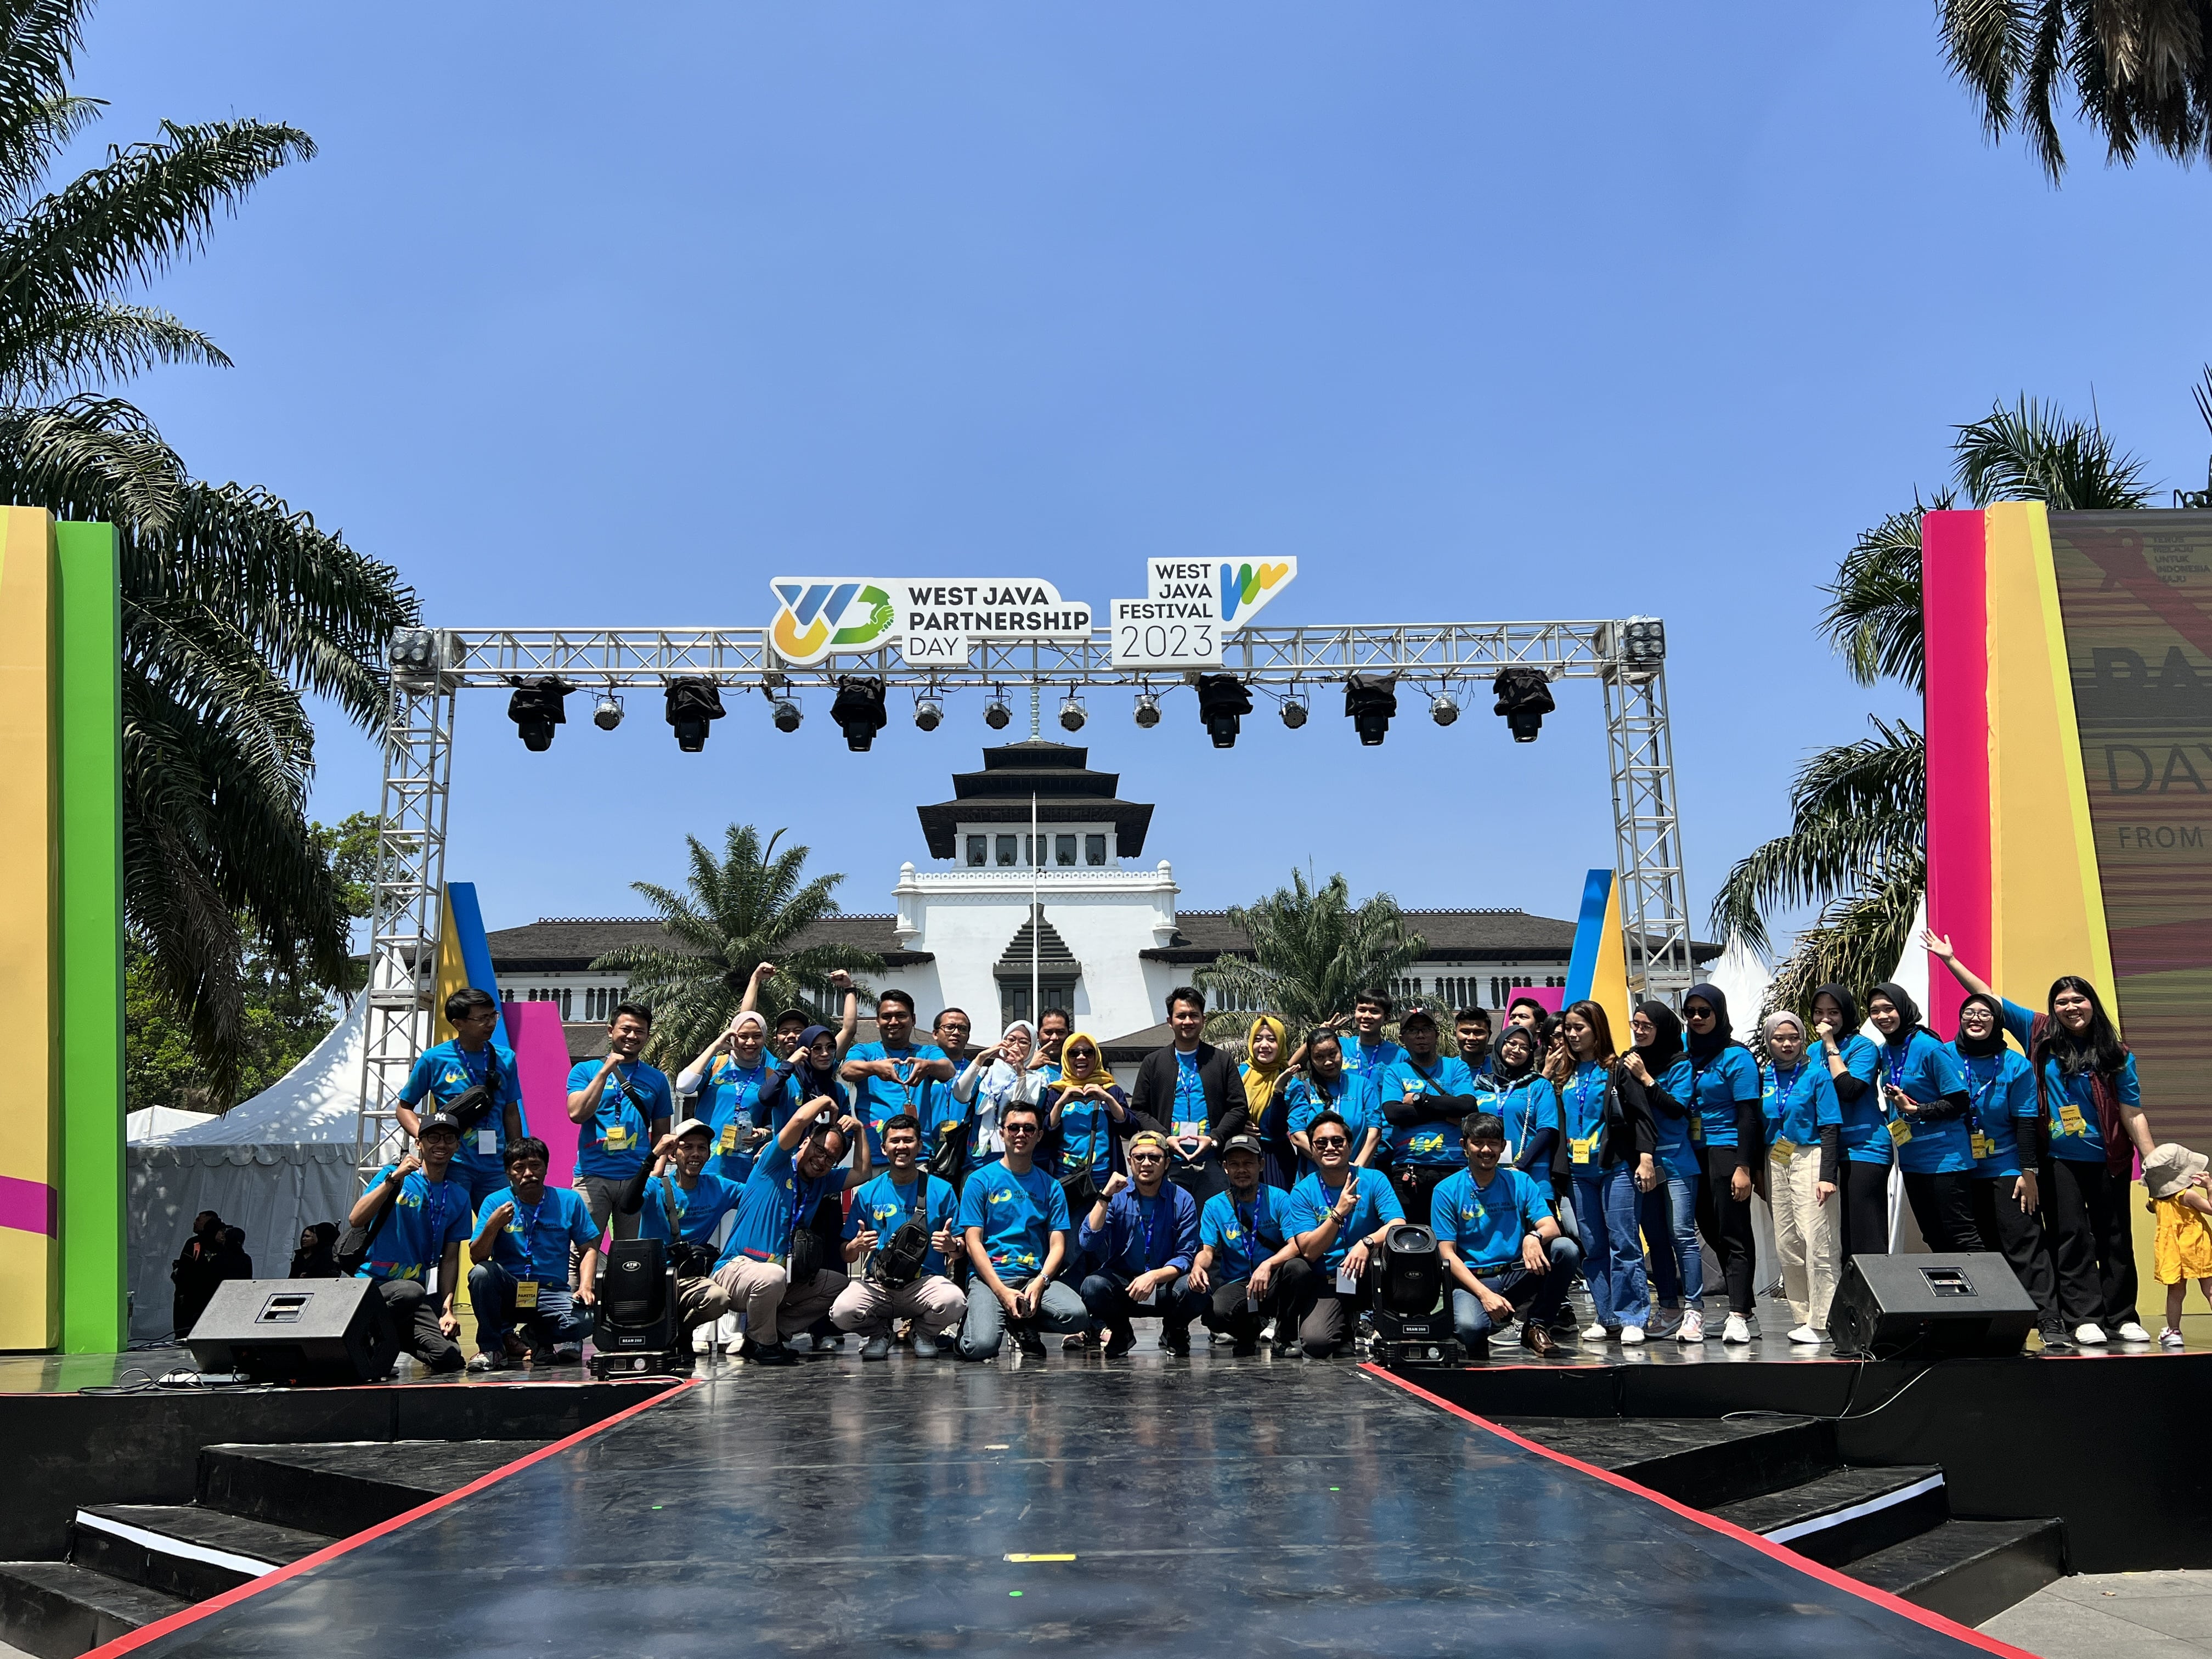 West Java Partnership Day": A Celebration of Collaborative Governance and Development